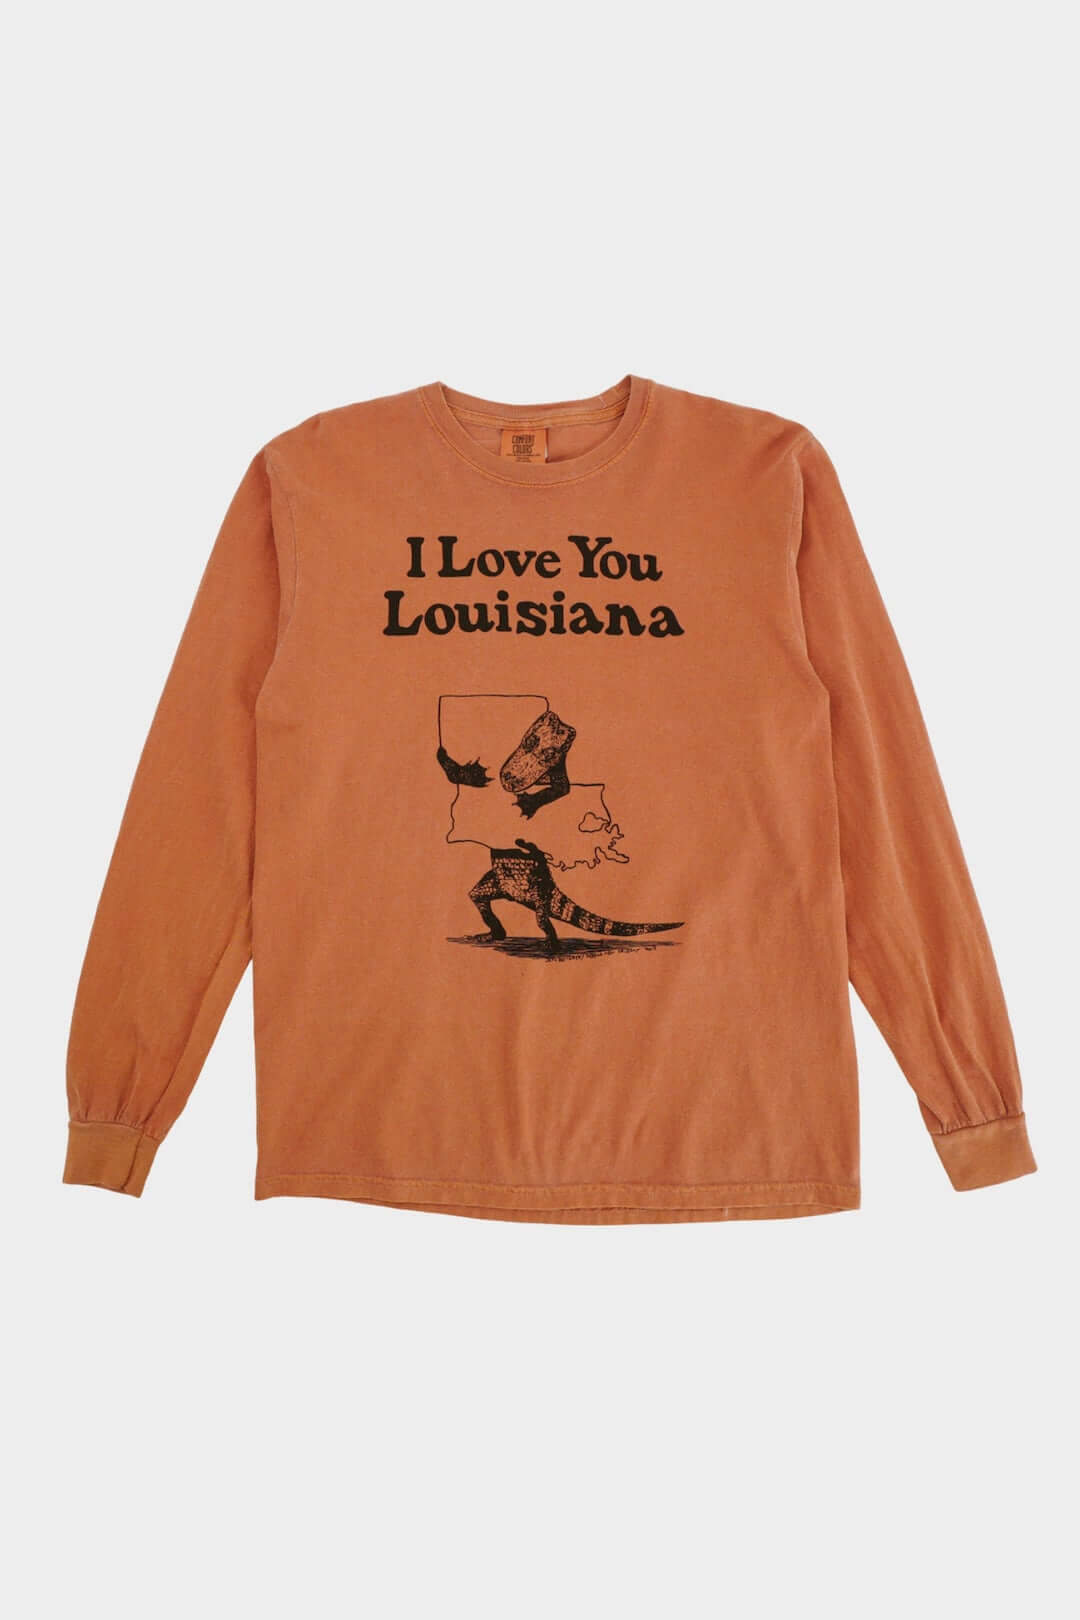 I Love You Louisiana T-Shirt - Pepper - DNO Unisex XL / Pepper